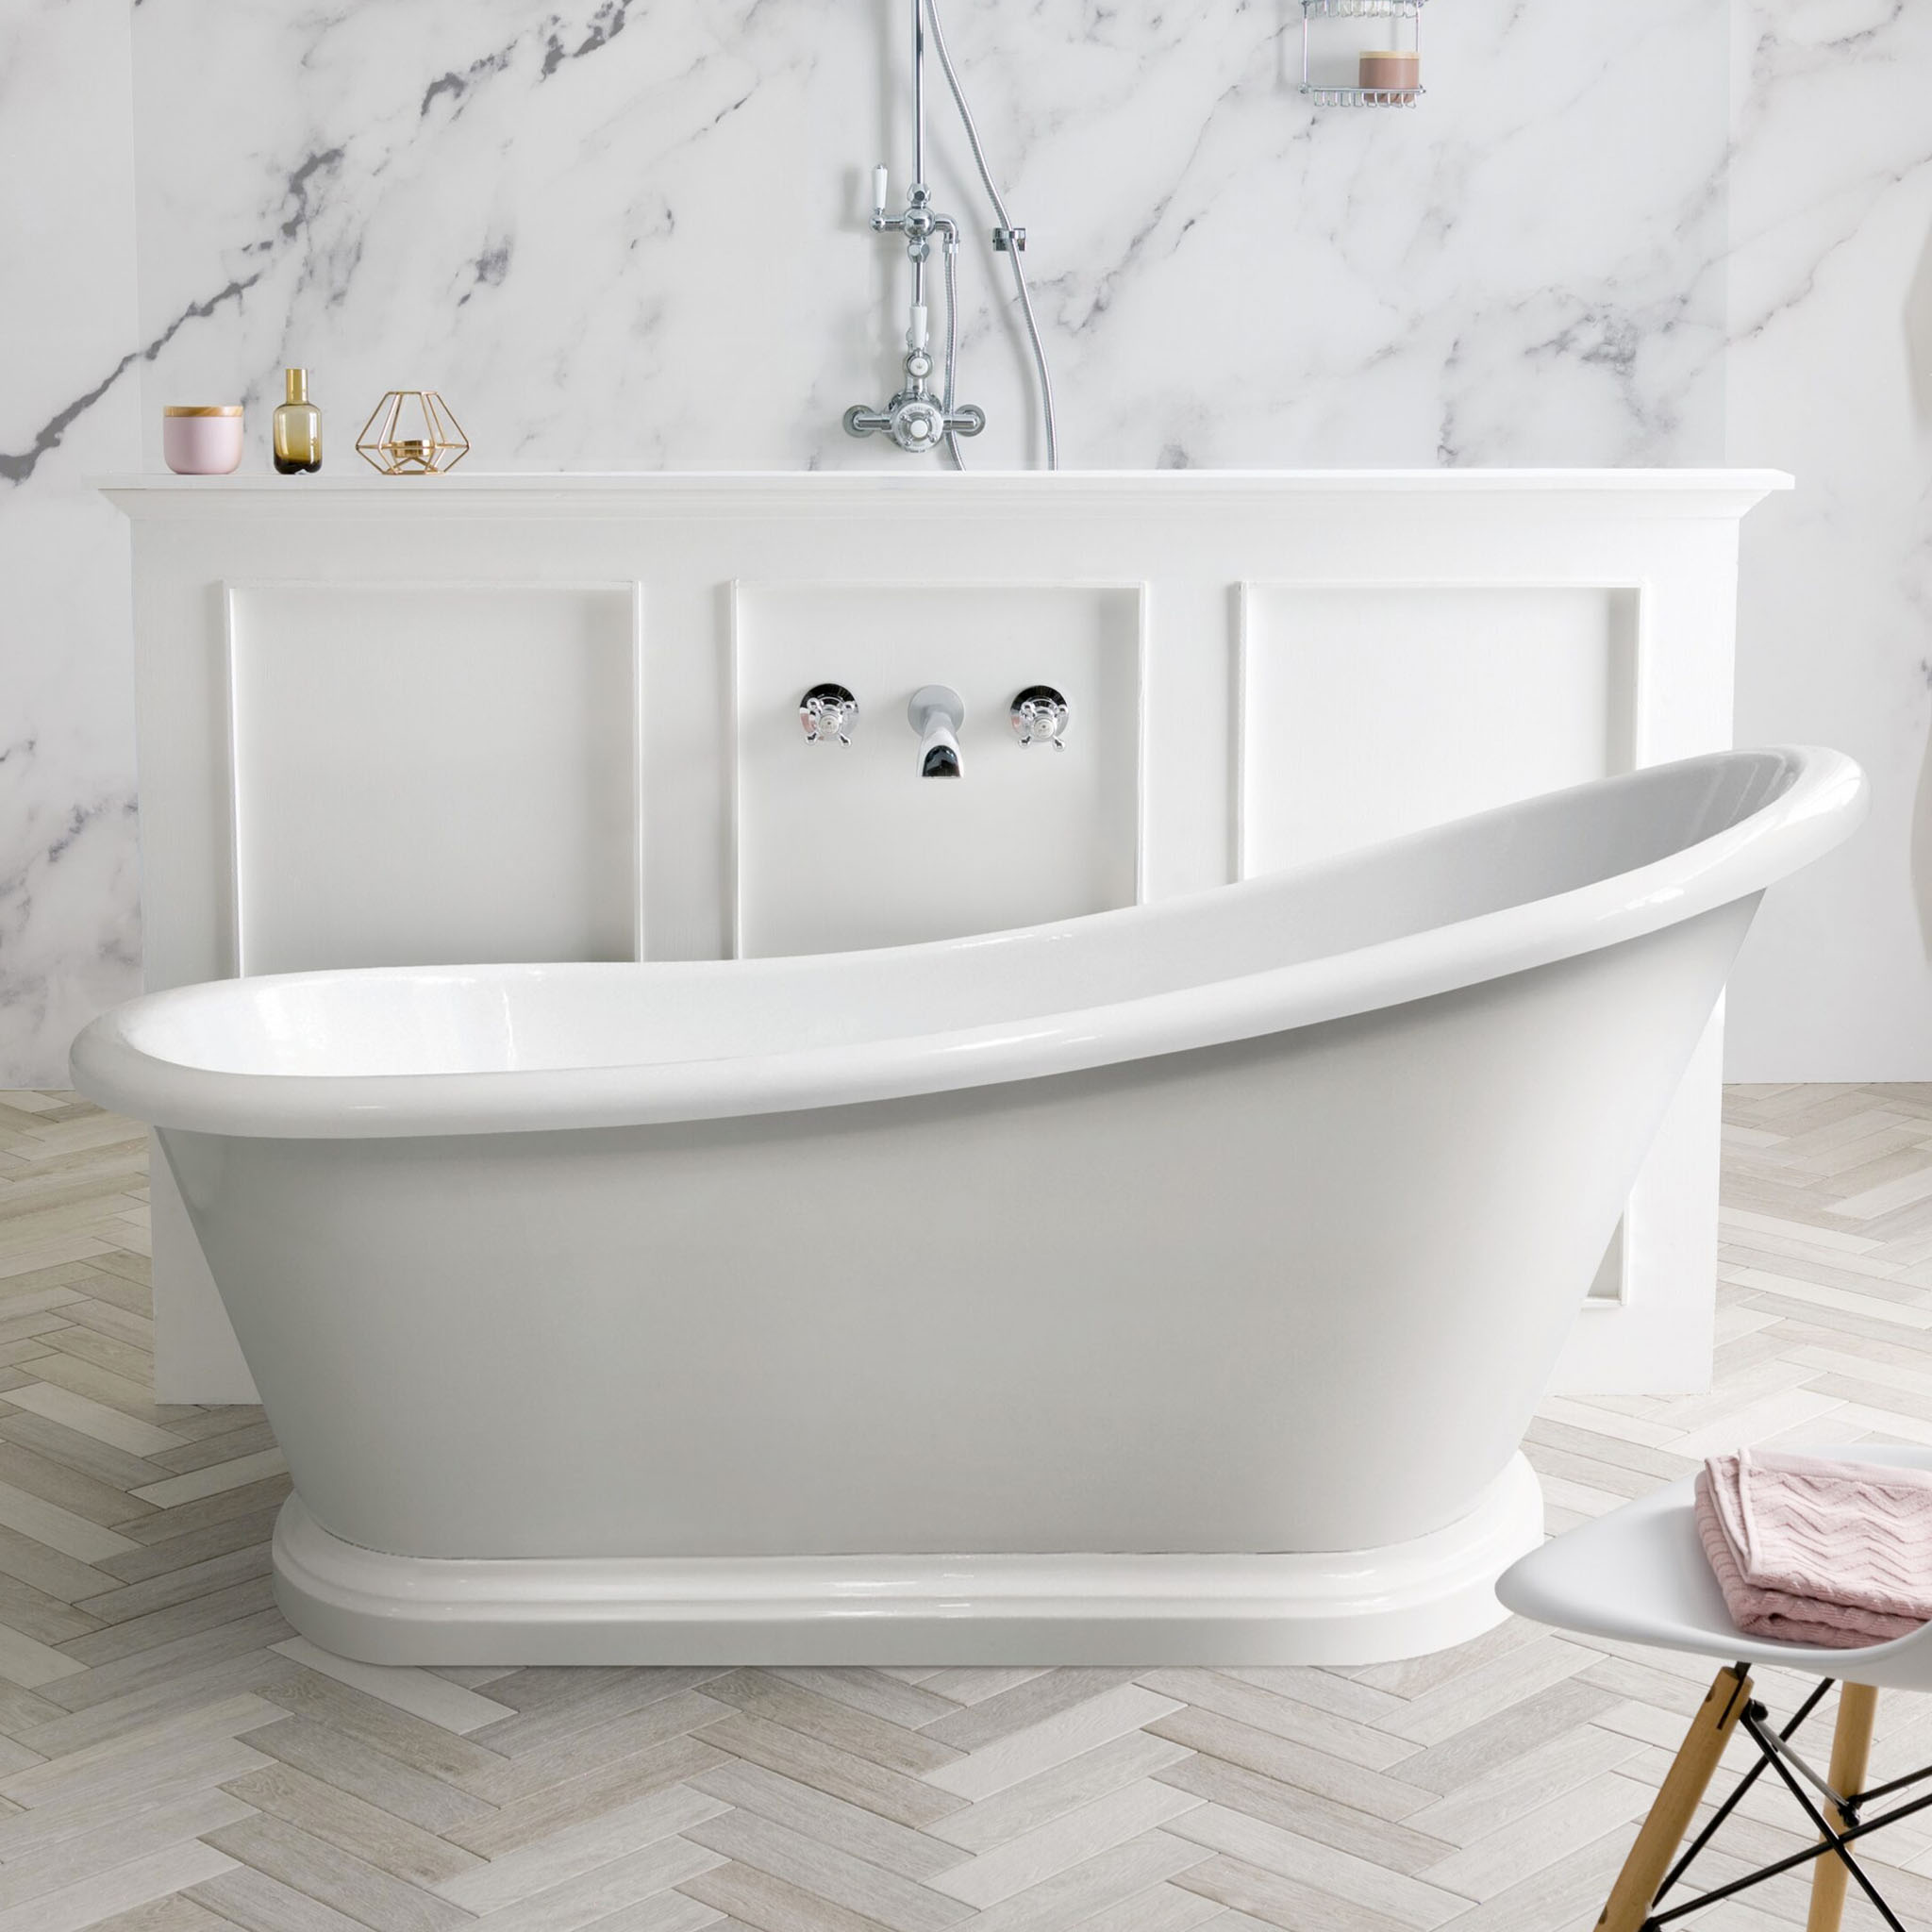 BC Designs Megane Slipper Single Ended Roll Top Bath